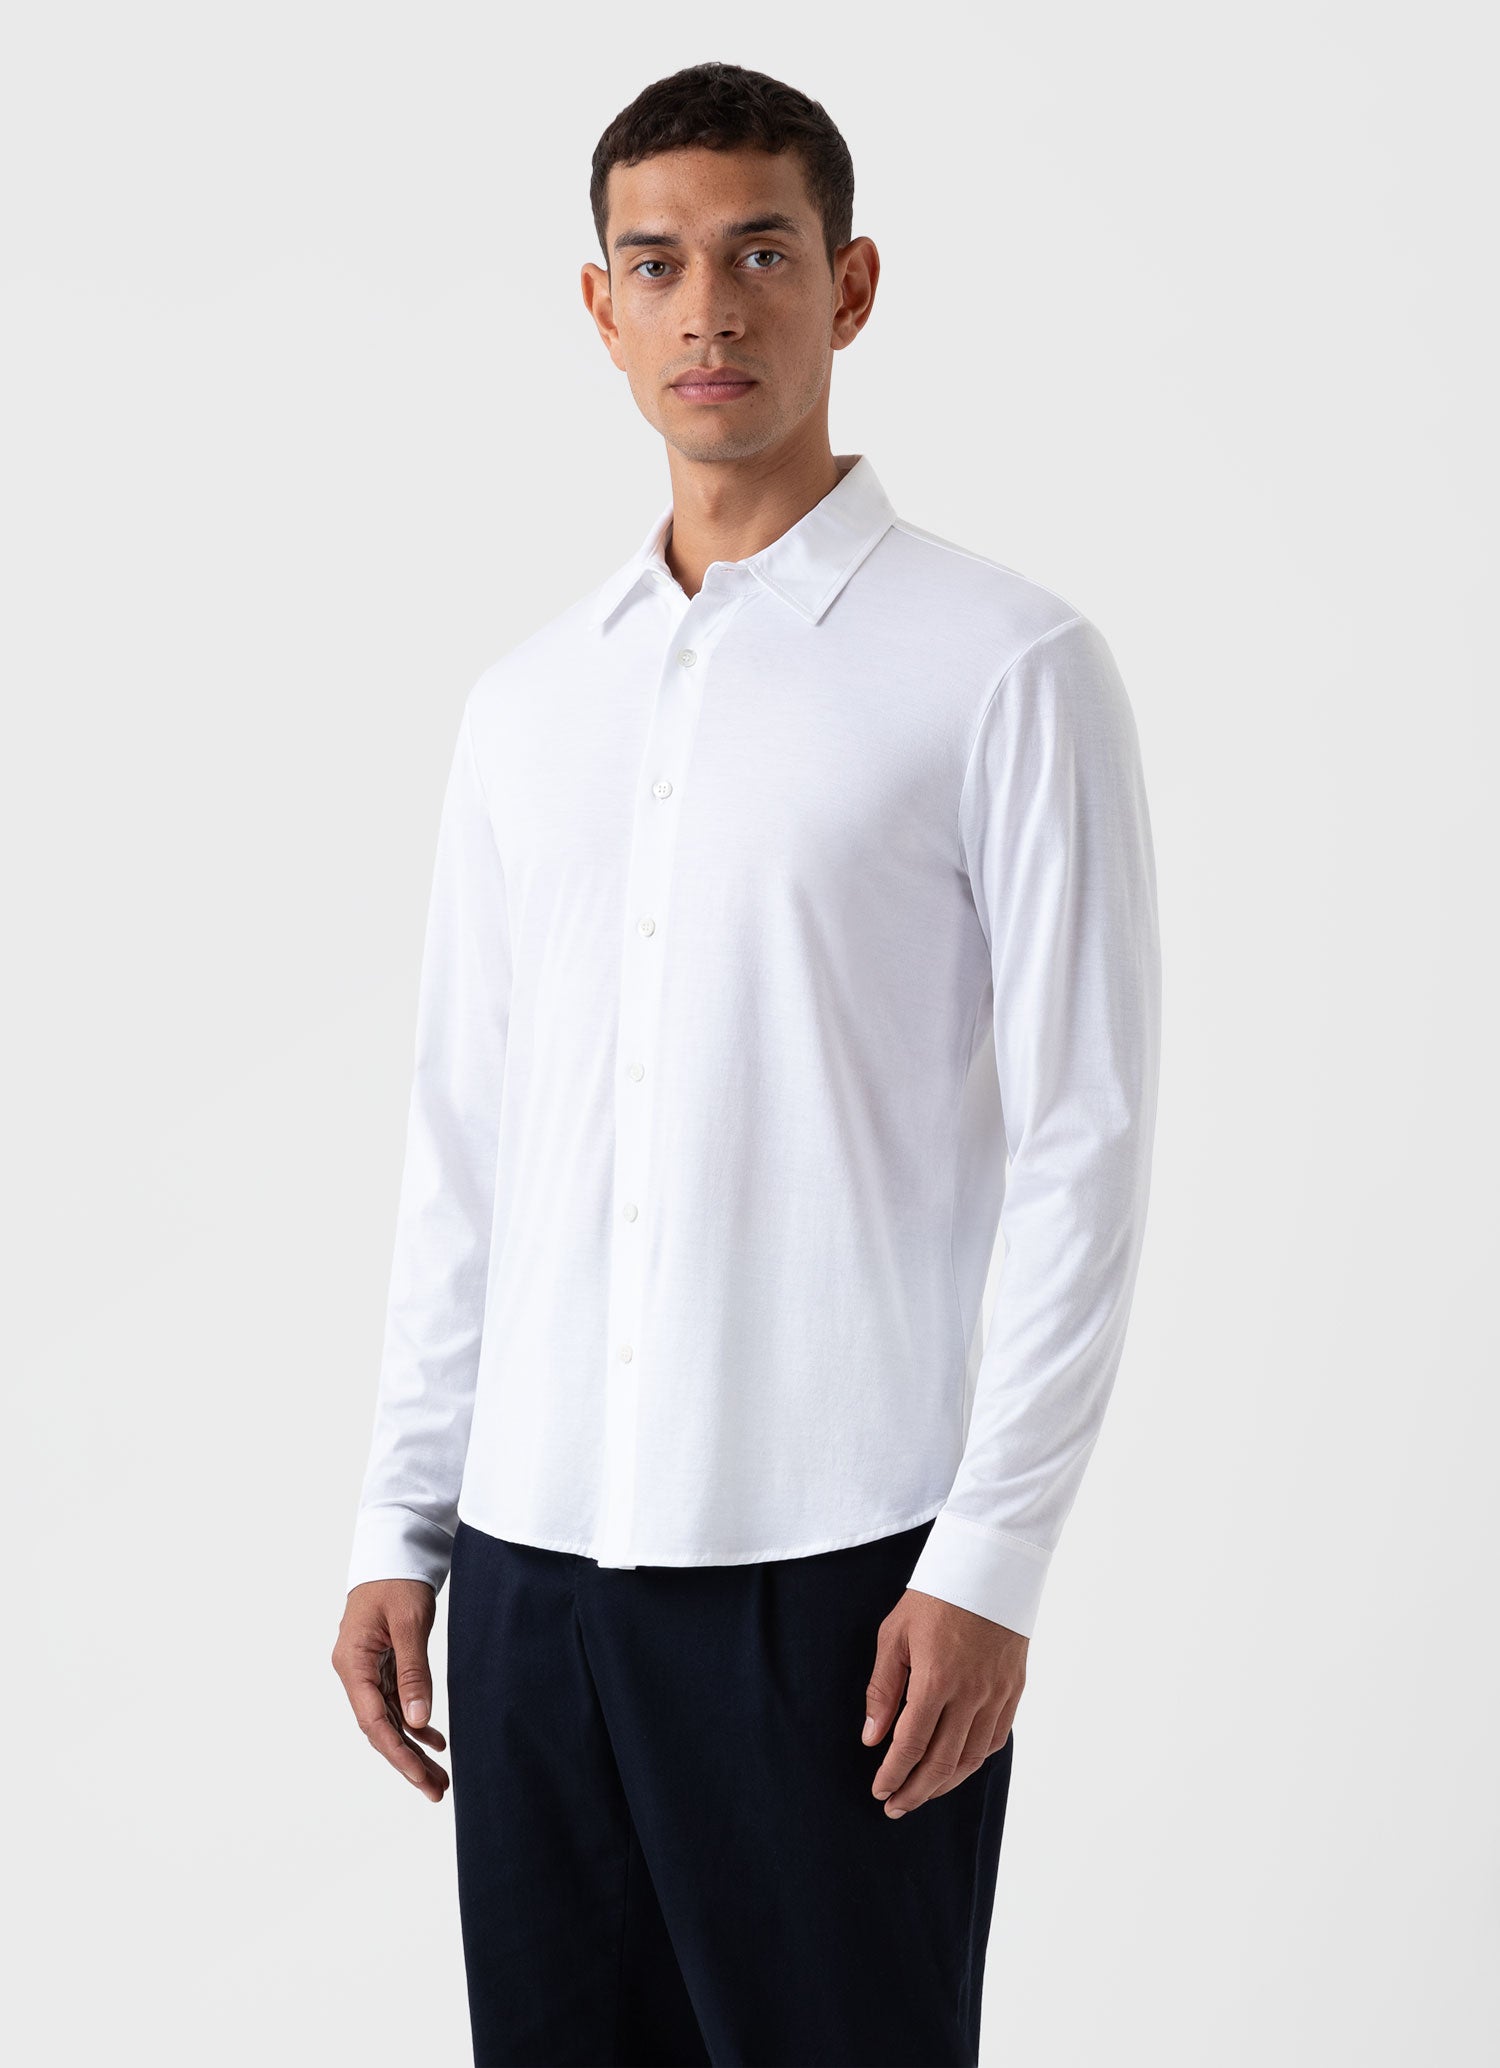 Men's Jersey Shirt in White